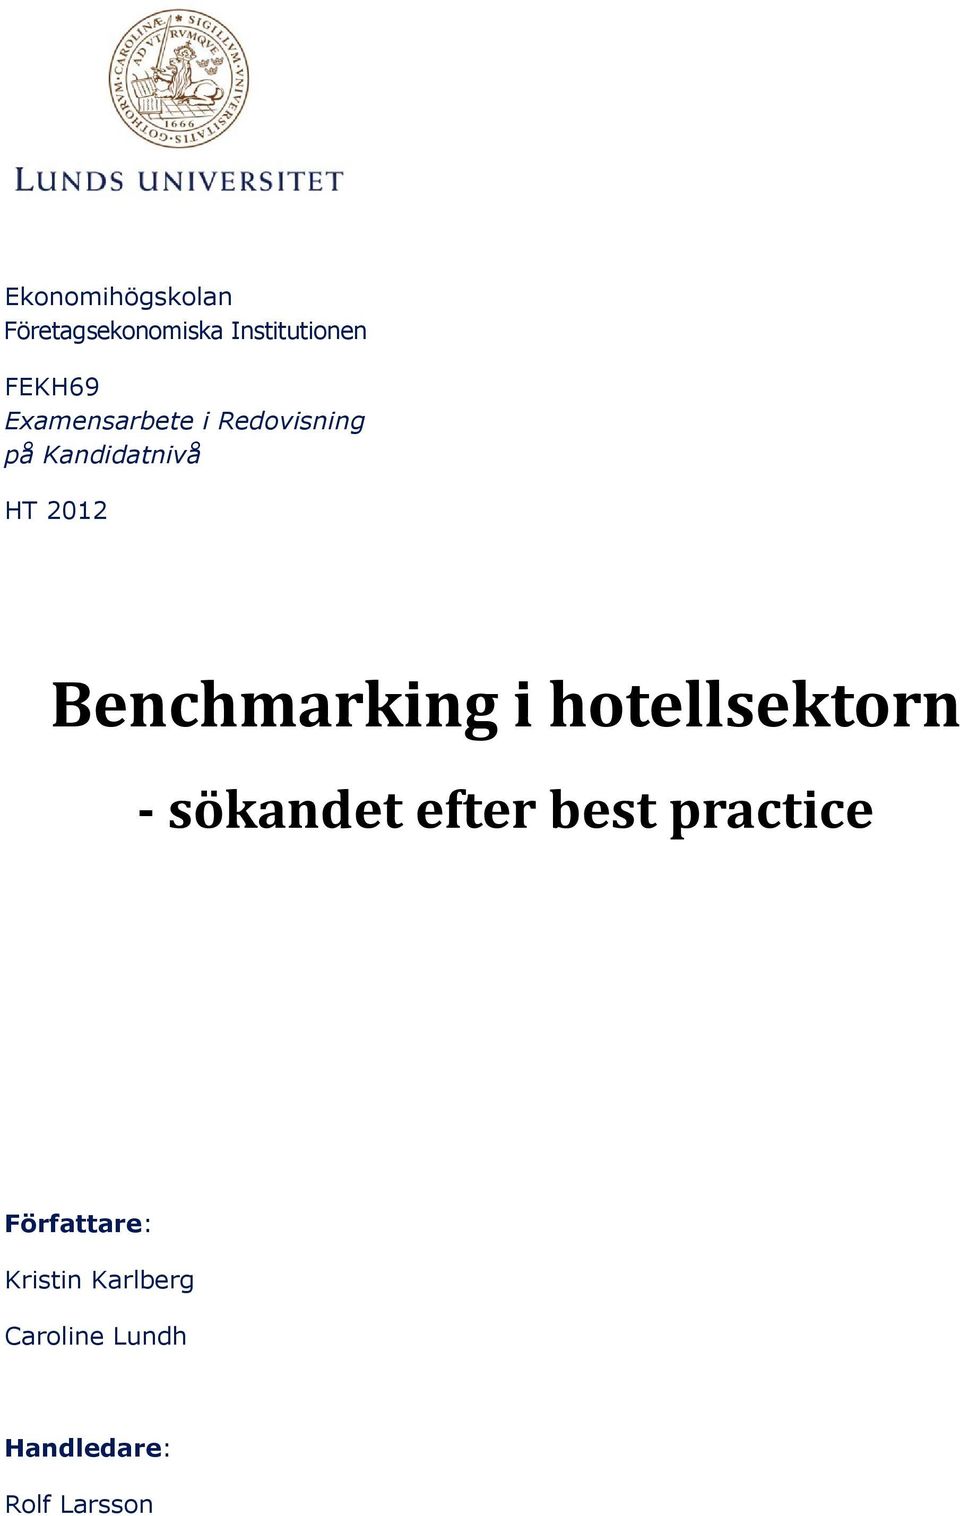 Benchmarking i hotellsektorn - sökandet efter best practice